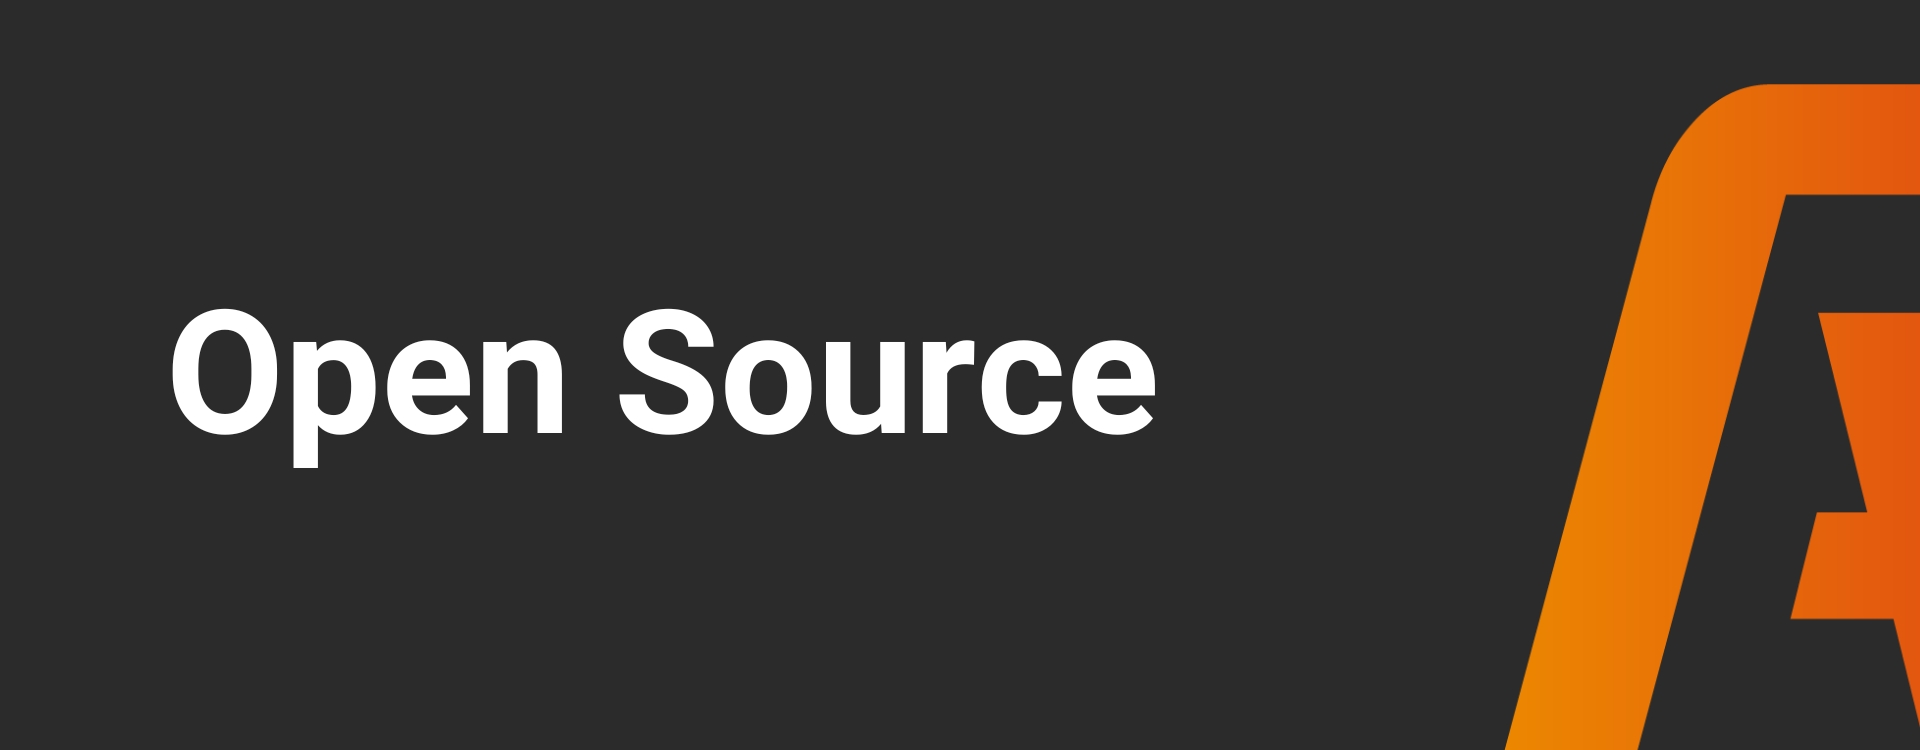 Wat is Open Source?